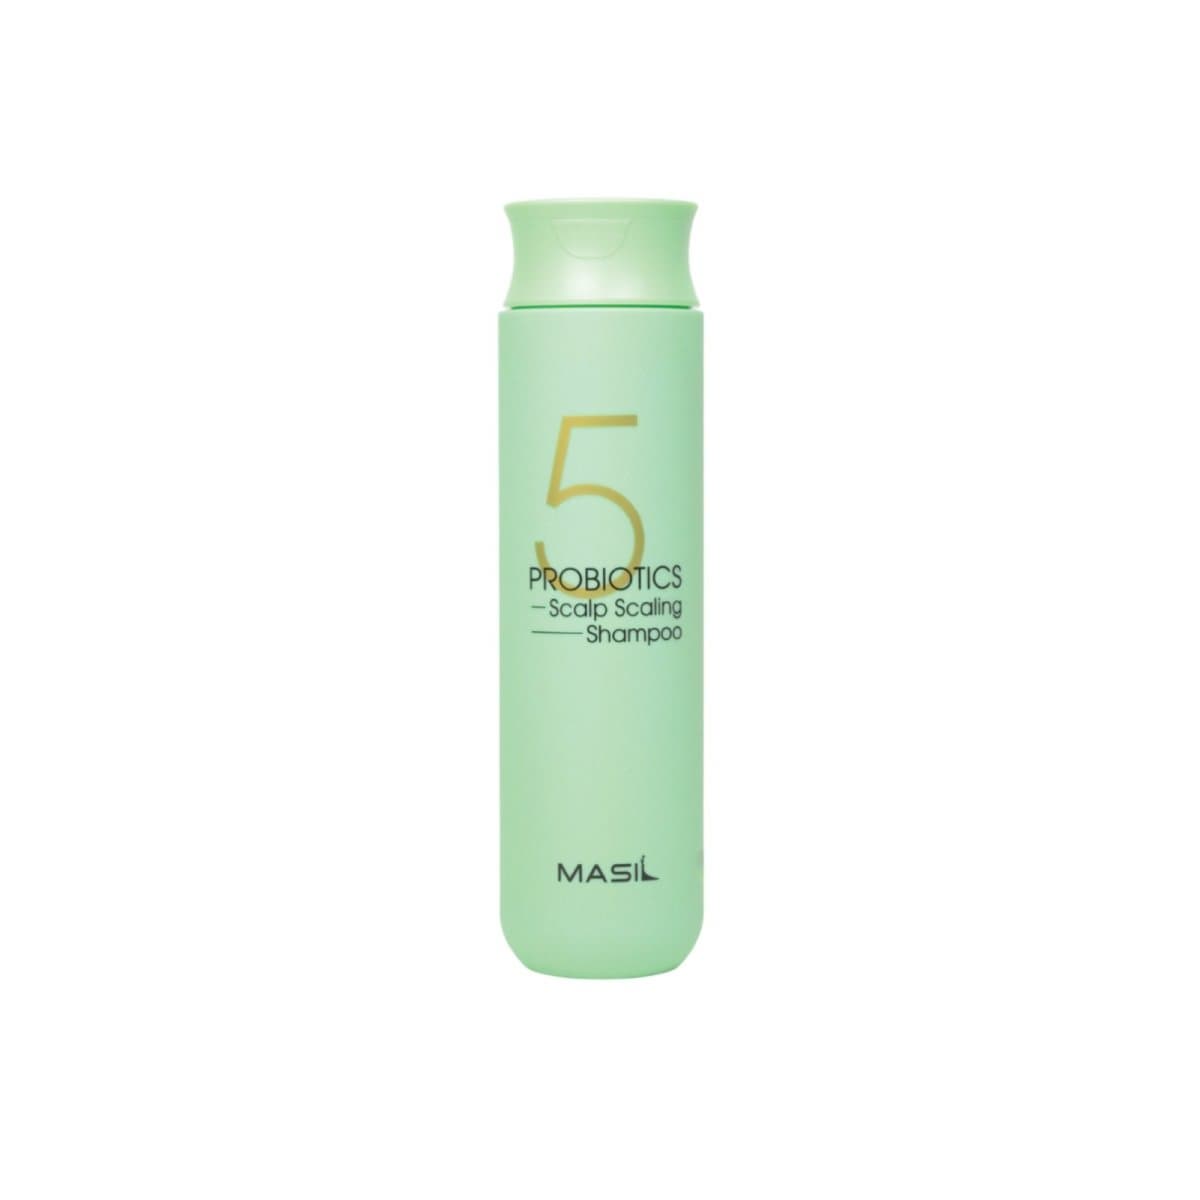 MASIL Probiotics Scalp Scaling Shampoo 300ML